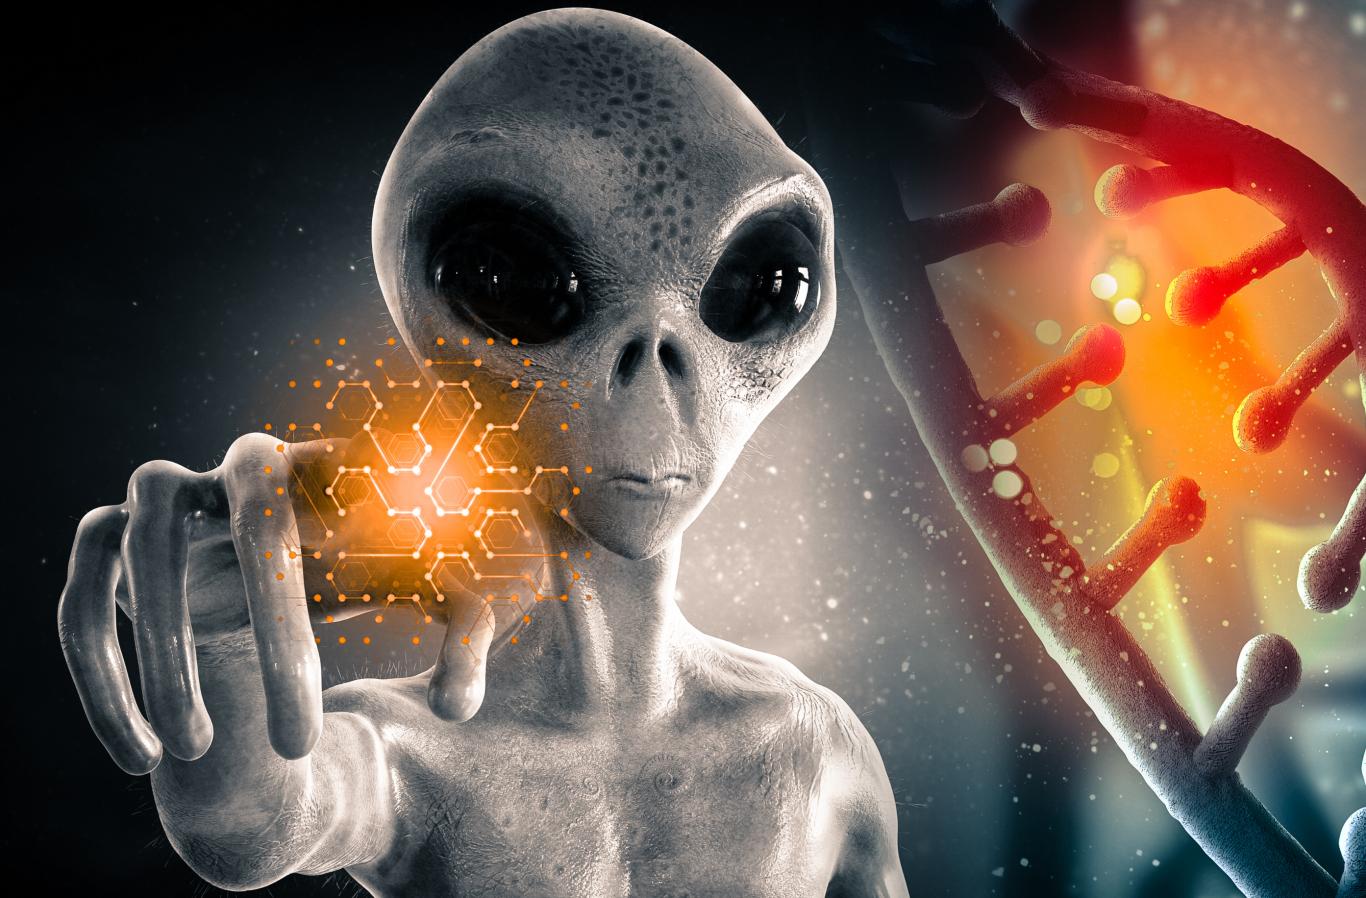 Did extraterrestrials genetically engineer Homo sapiens 780,000 years ago? 2